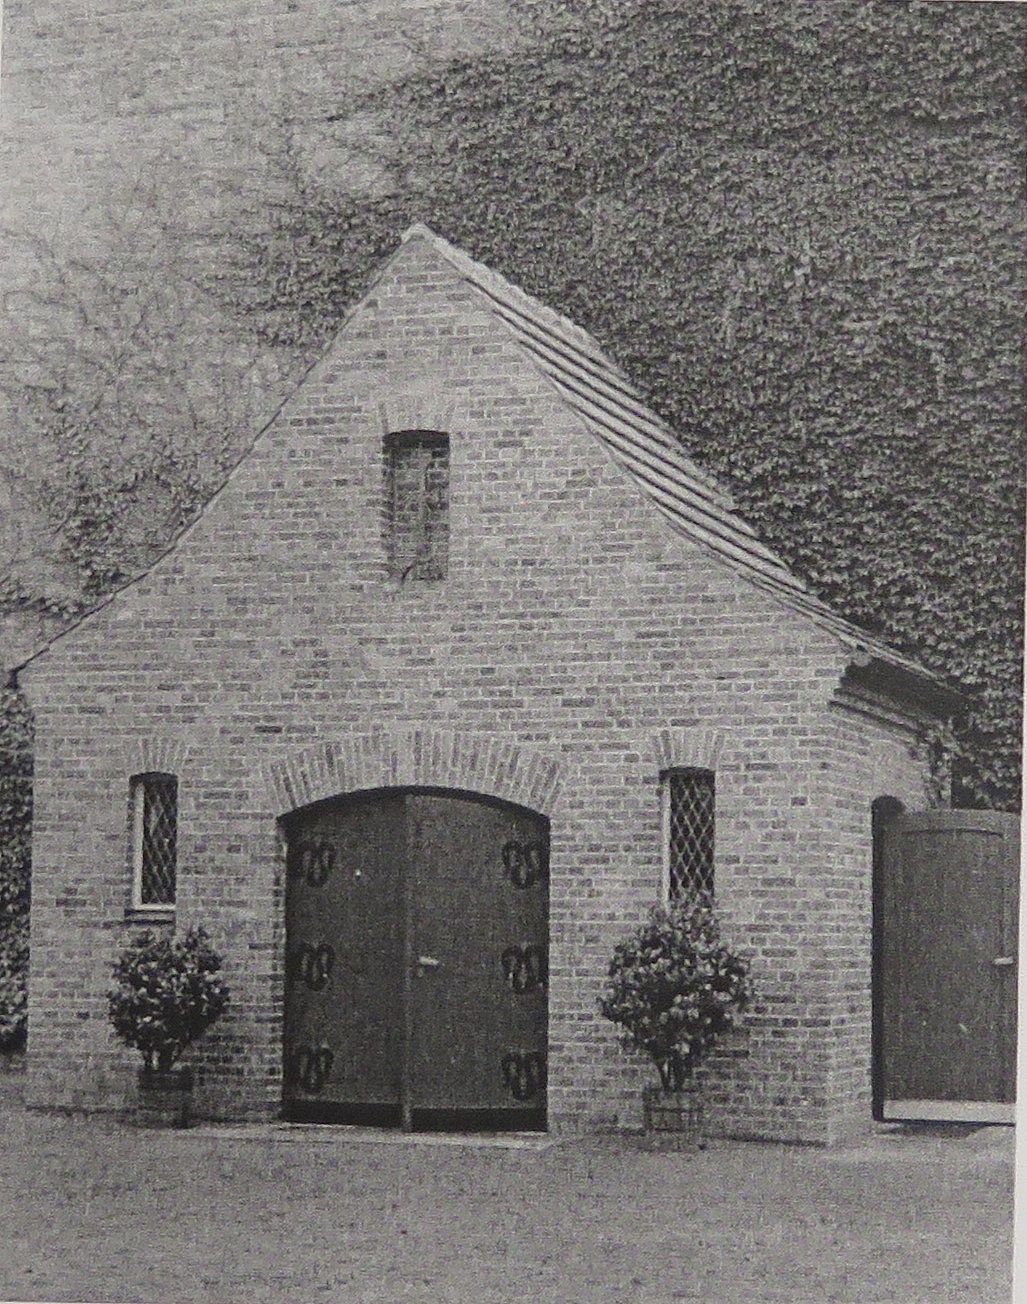 Neuer Eingang Rückseite der Kirche seit 1946